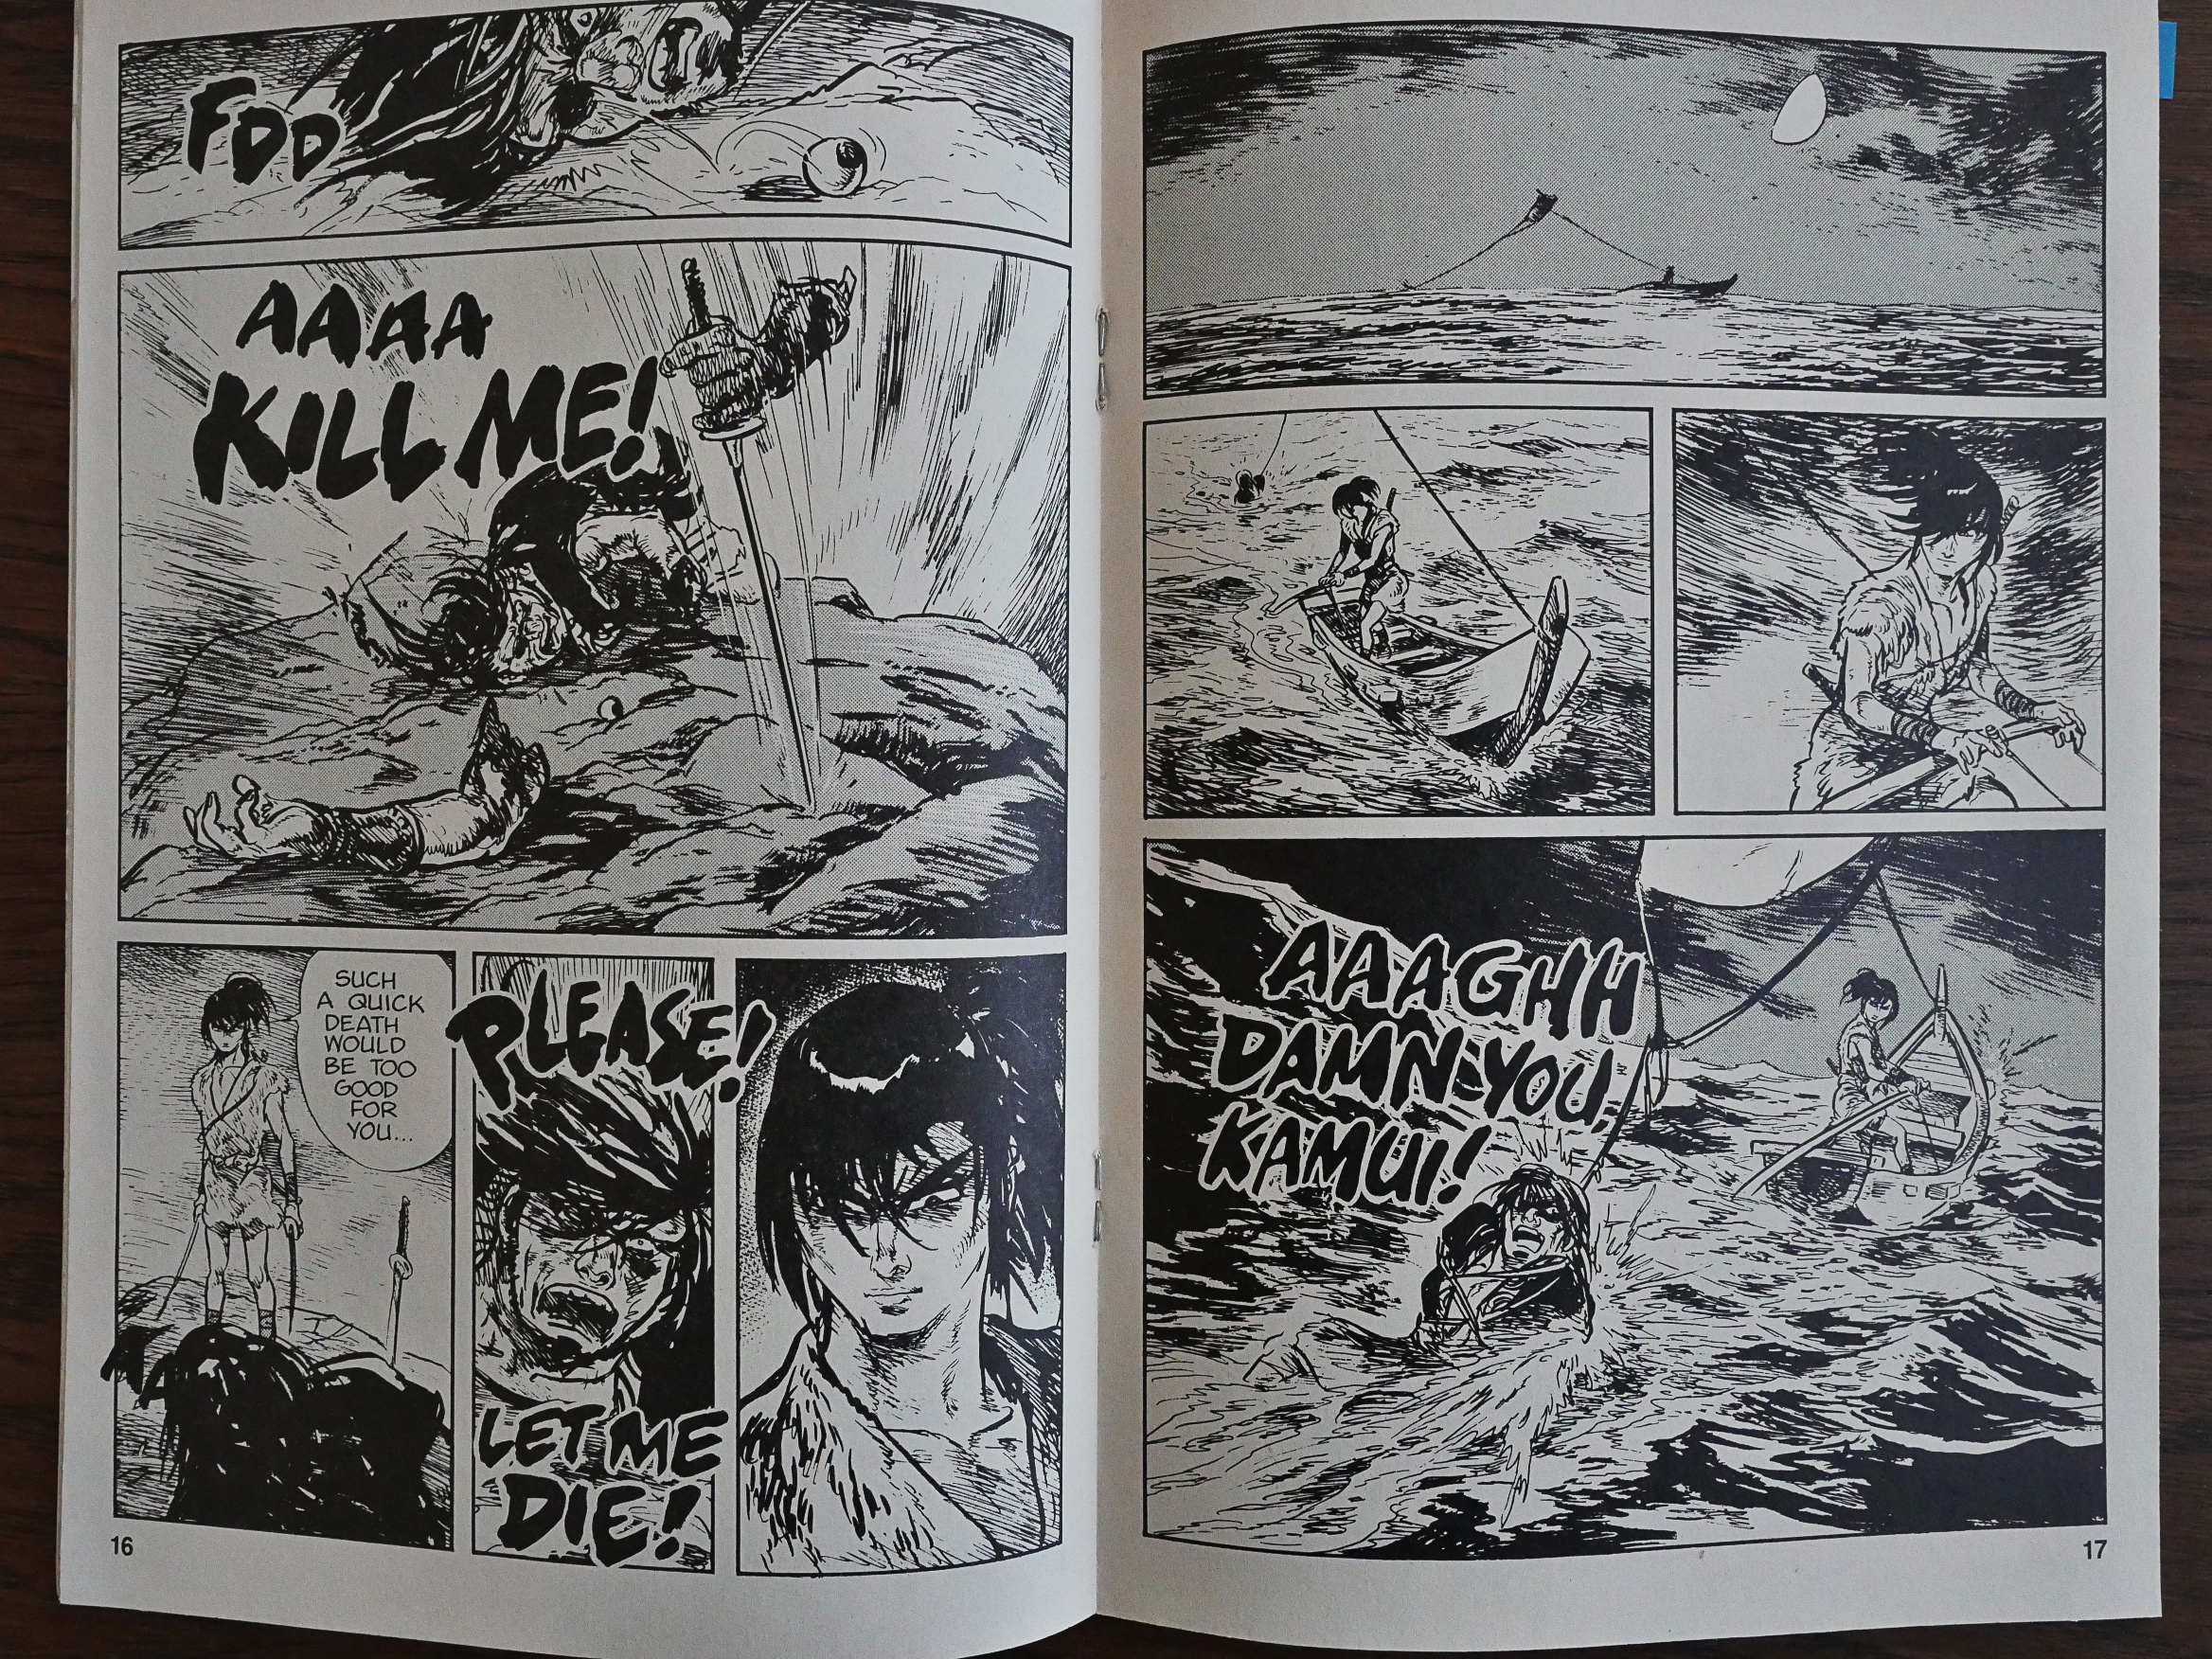 Anime and Manga Comics Kamui #16 Eclipse Comics Sanpei Shirato